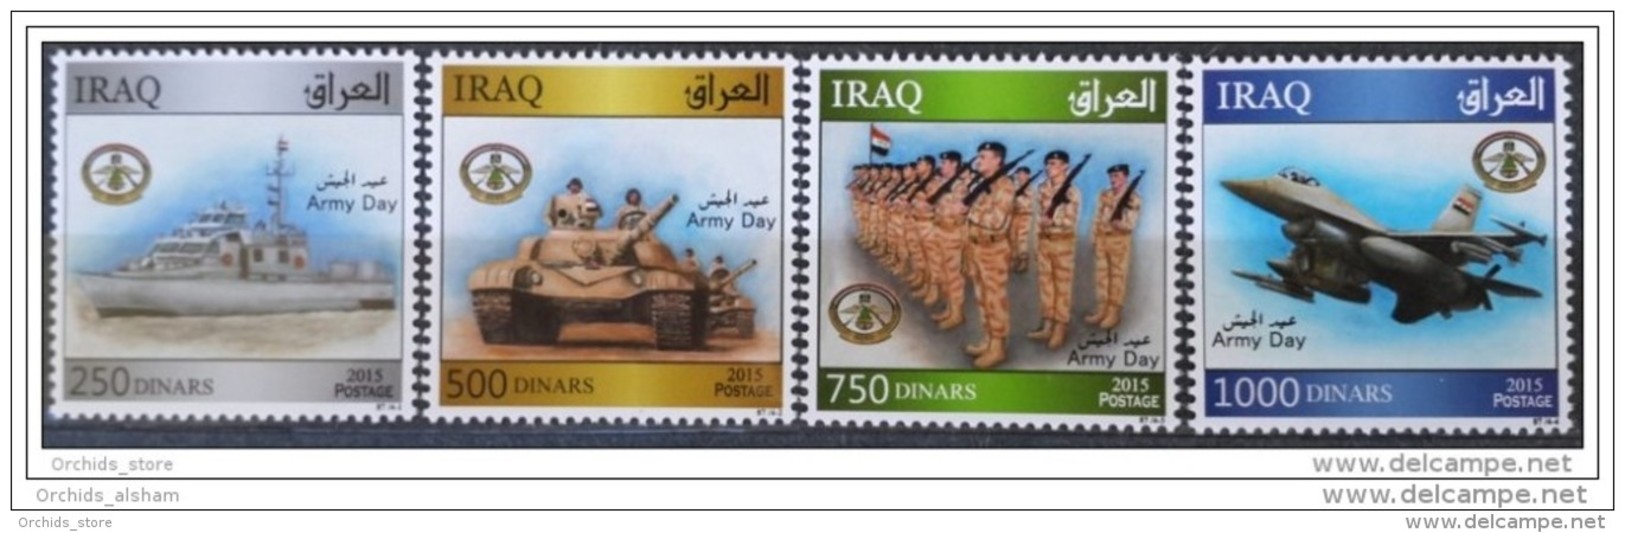 Iraq NEW 2015 Issue - Dated 2014 - Army Day Complete Set - Warplane Warcraft Tank Soldiers - MNH - Iraq